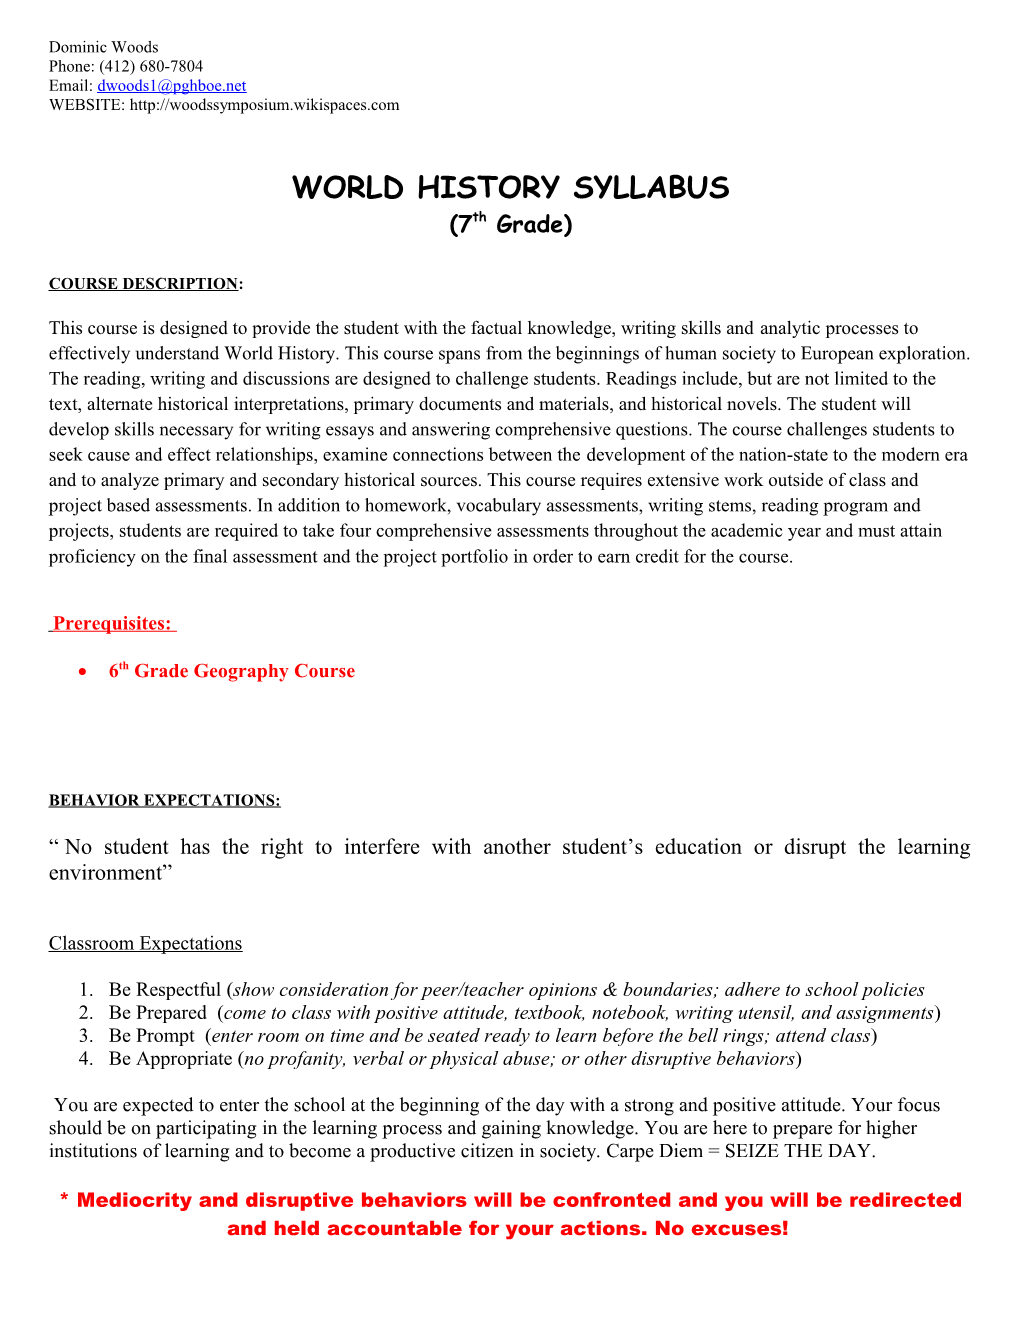 World History Syllabus s1